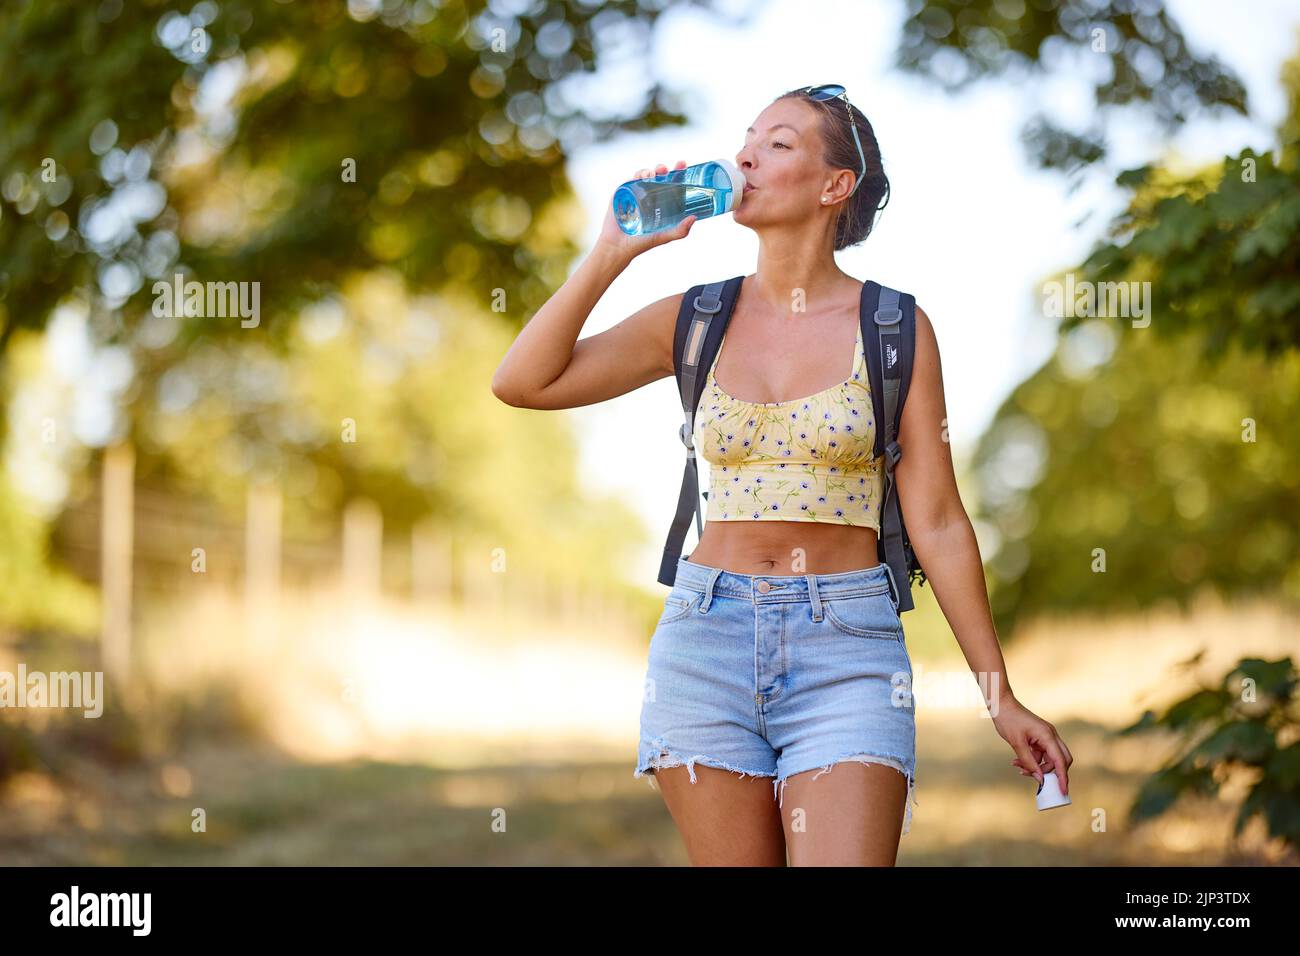 Mujer relajándose al aire libre con una botella de agua Foto de stock